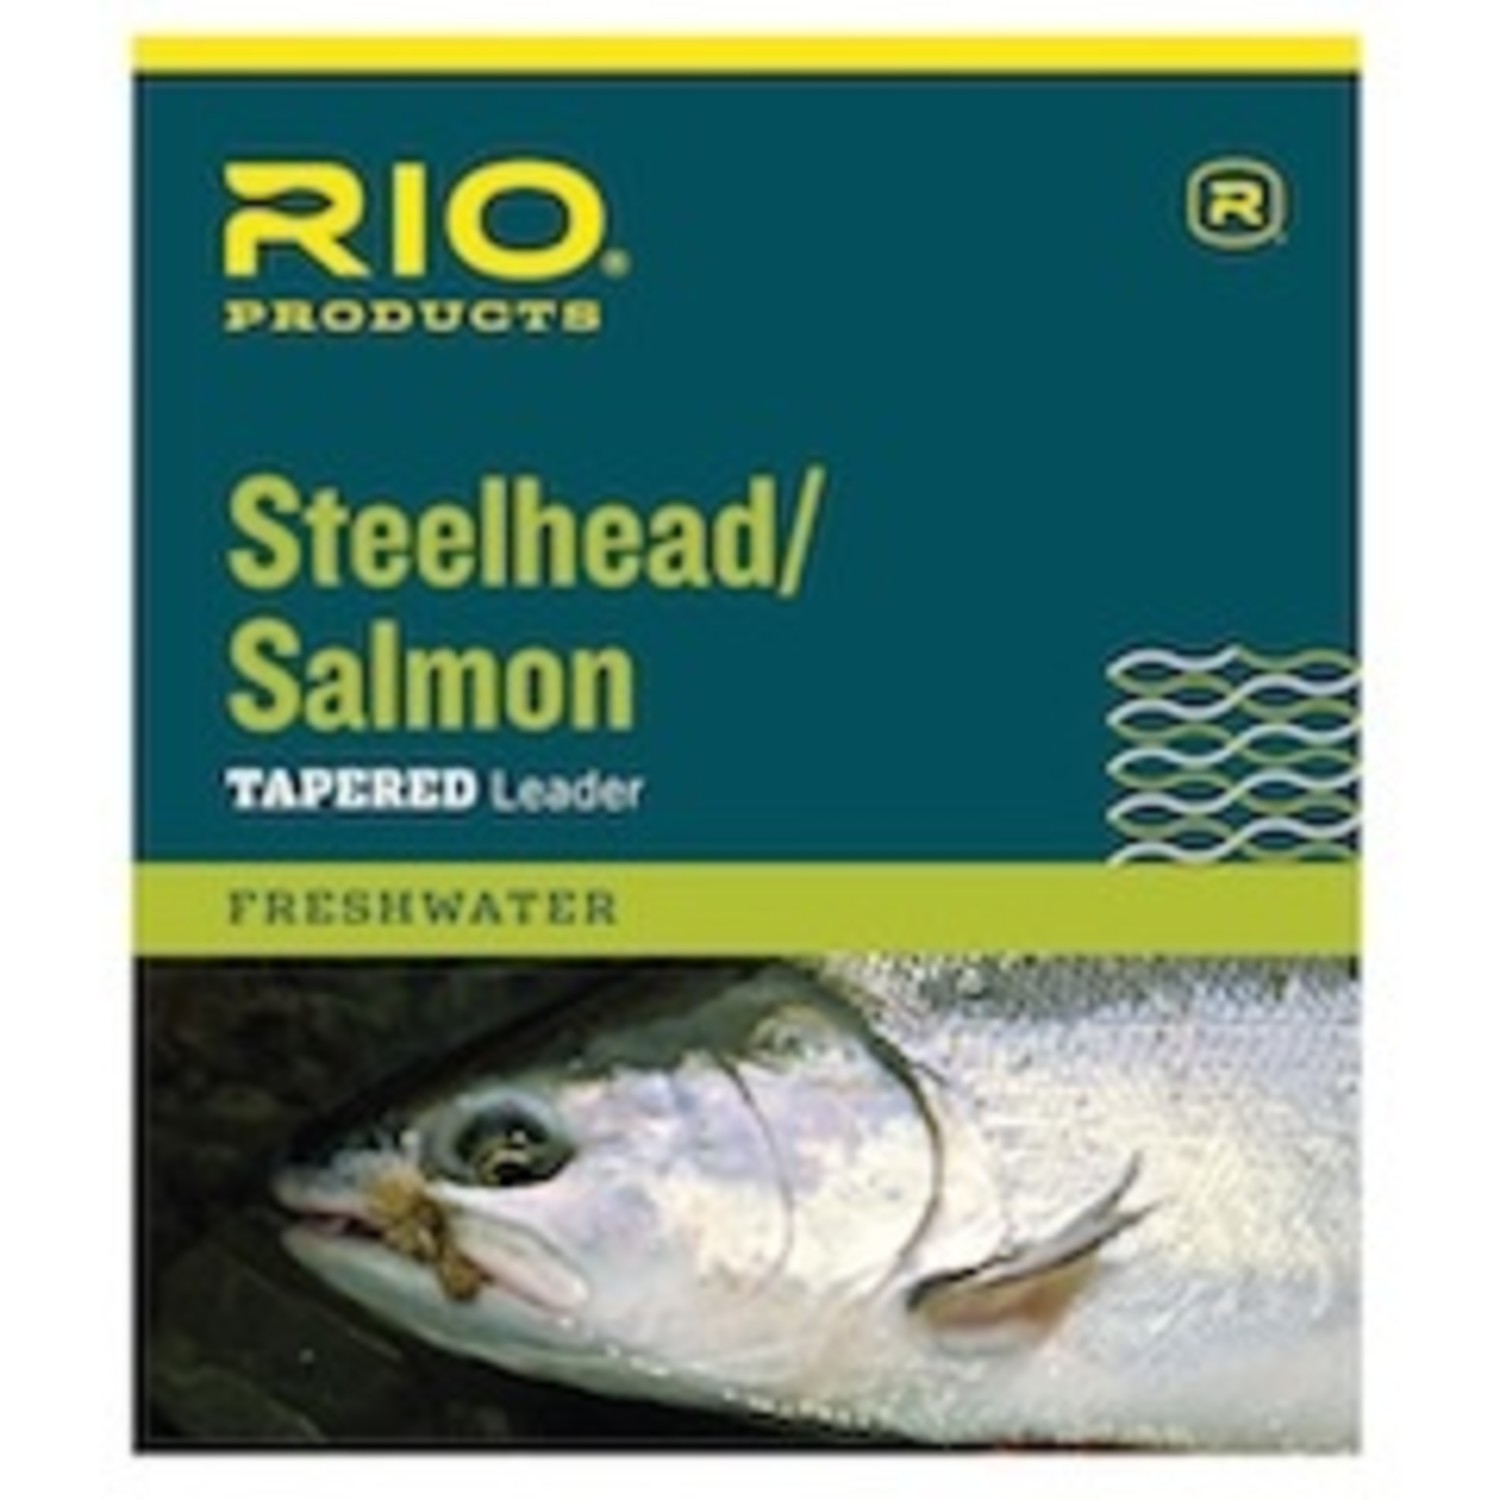 Rio Rio Steelhead/ Salmon Tapered Leader, Glacial Green - Royal